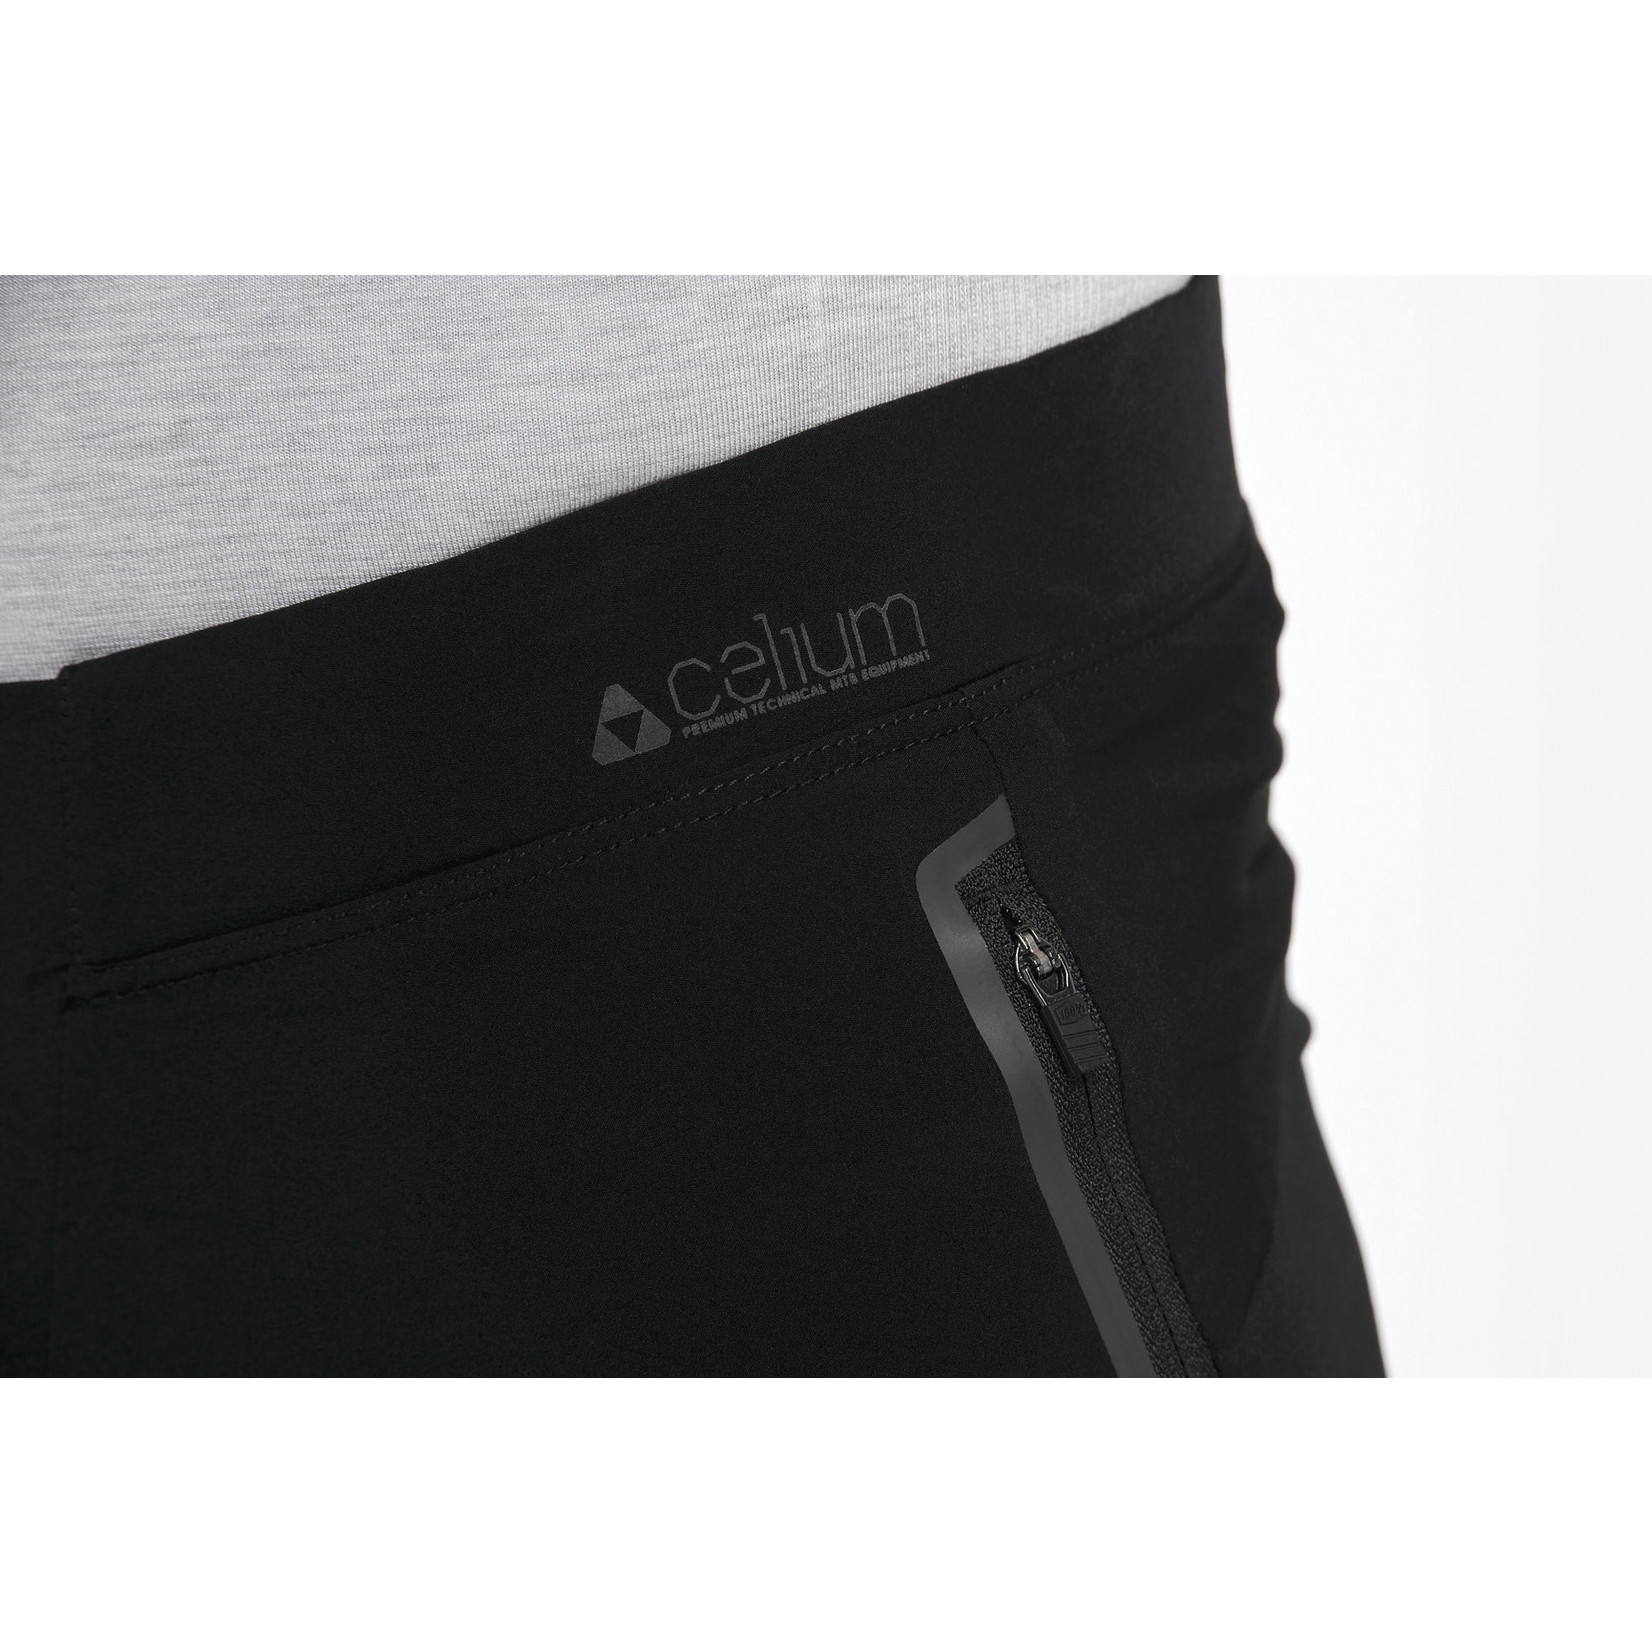 100 Percent 100% Celium DWR Lightweight Nylon/Spandex Shorts -92% Nylon, 8% Elastane- Black